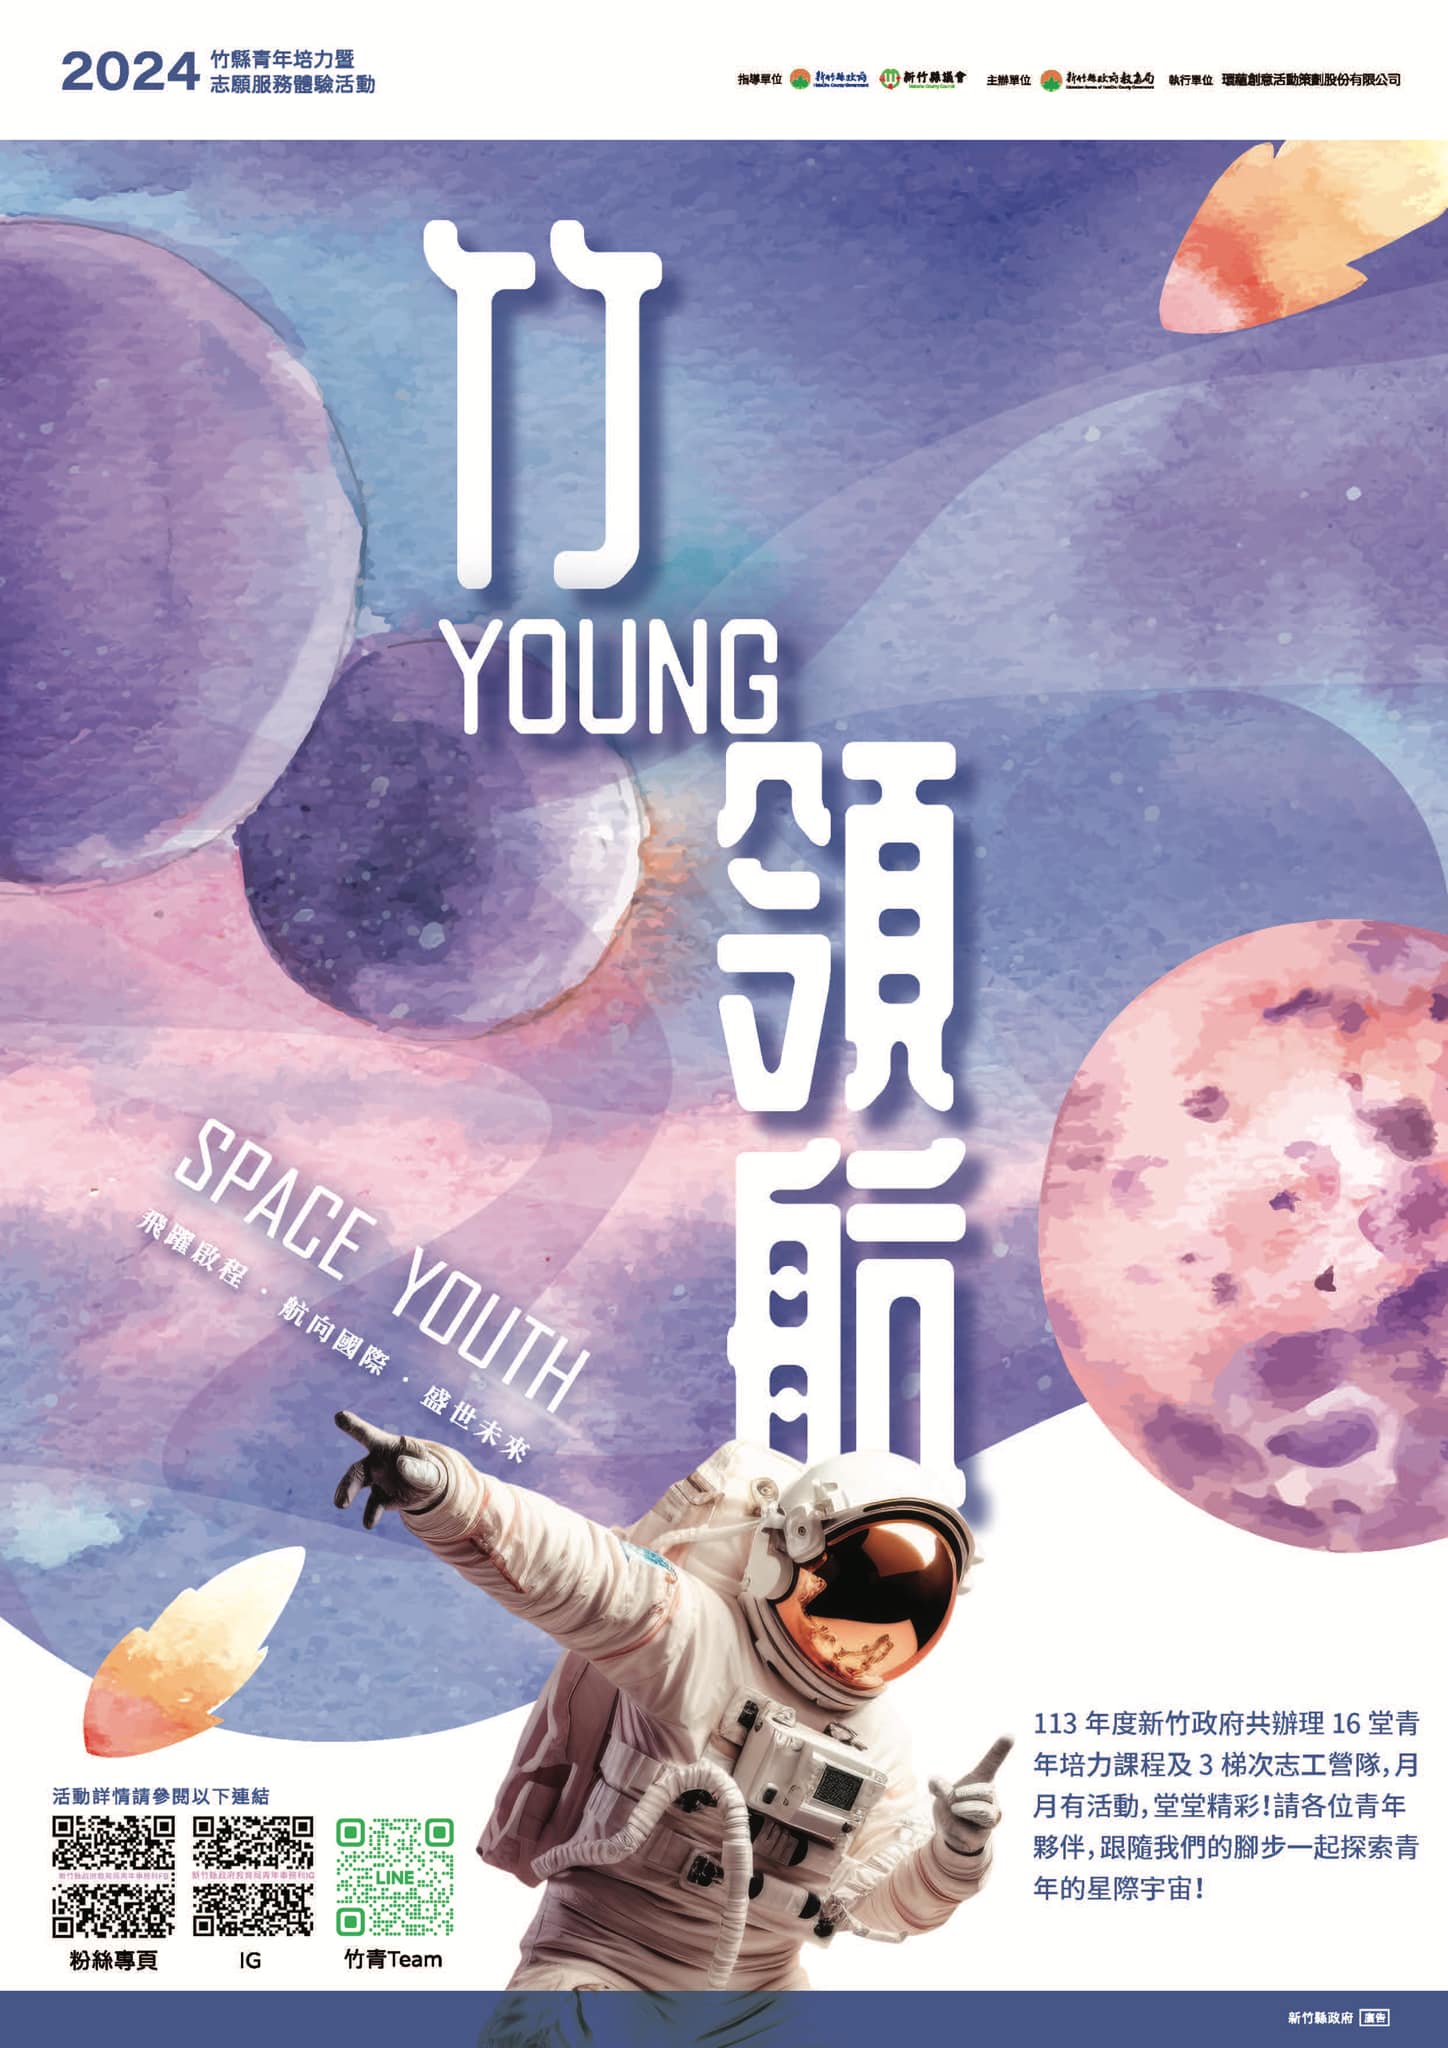 新竹縣113年度「竹young領航．Space Youth：志工服務營隊」